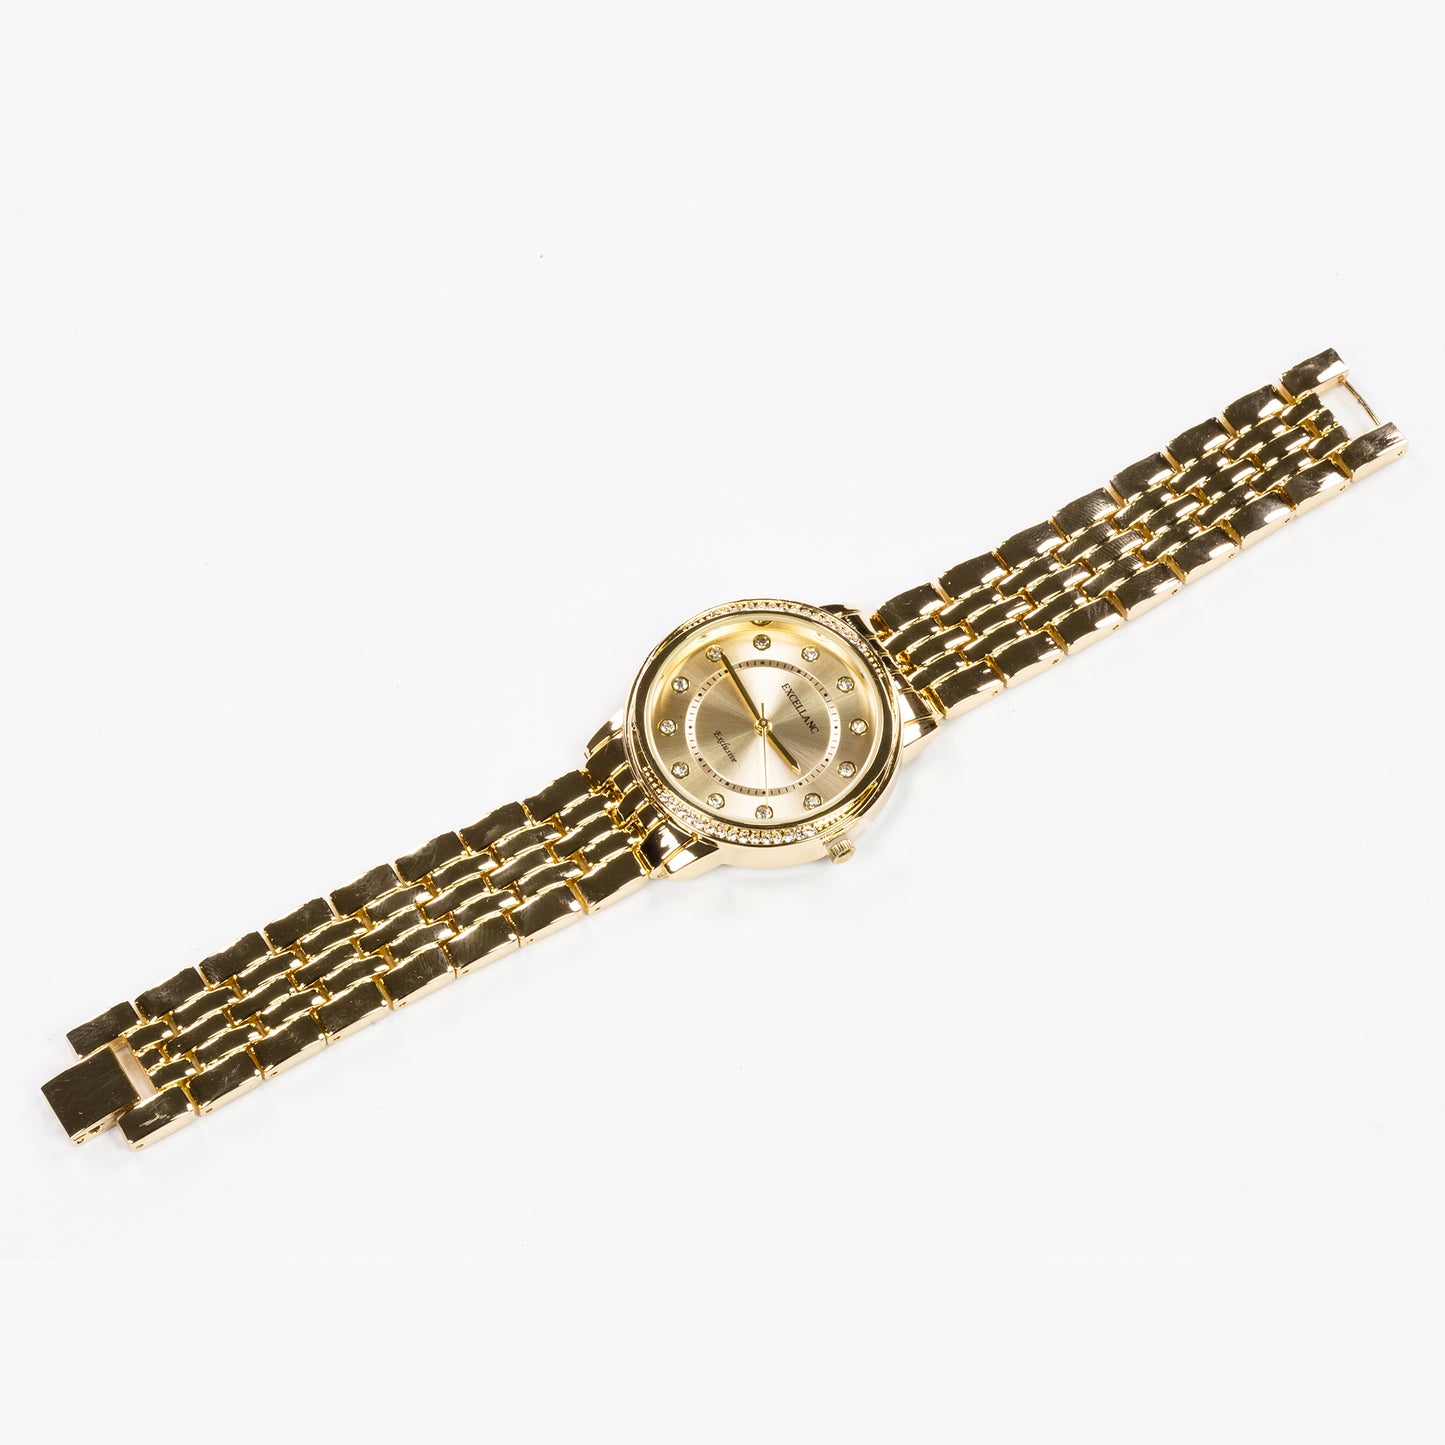 Excellanc gift set, ladies, watch, bracelet, bangle, gold-colored